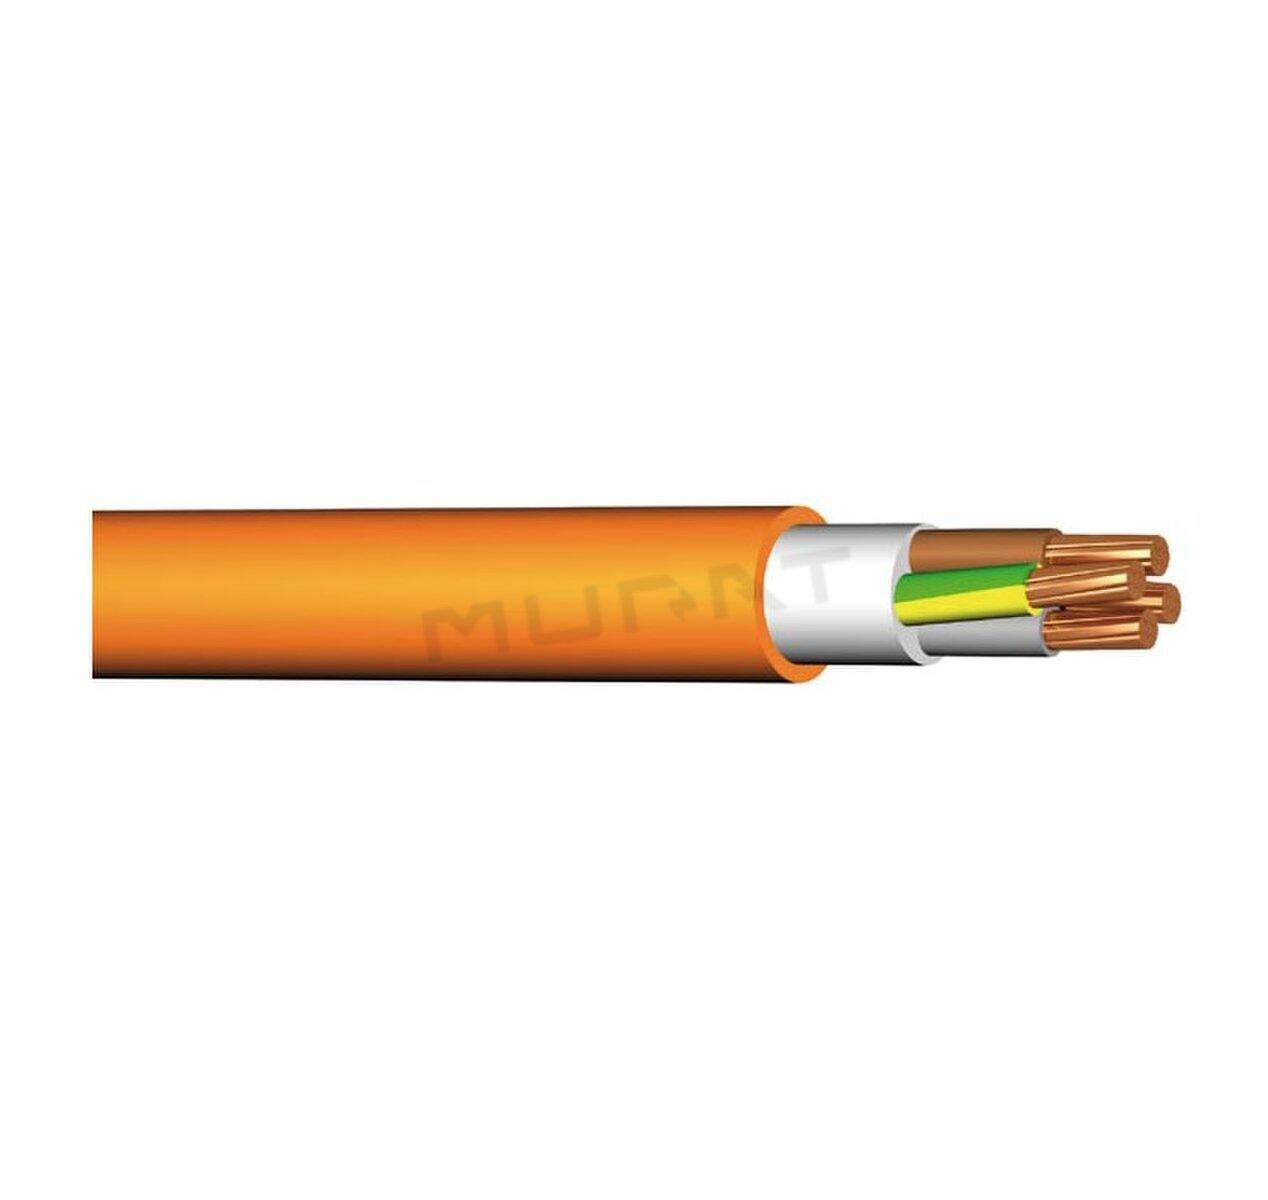 Kábel PRAFlaSafe X-J 4x120 mm2 SM B2ca s1d1a1